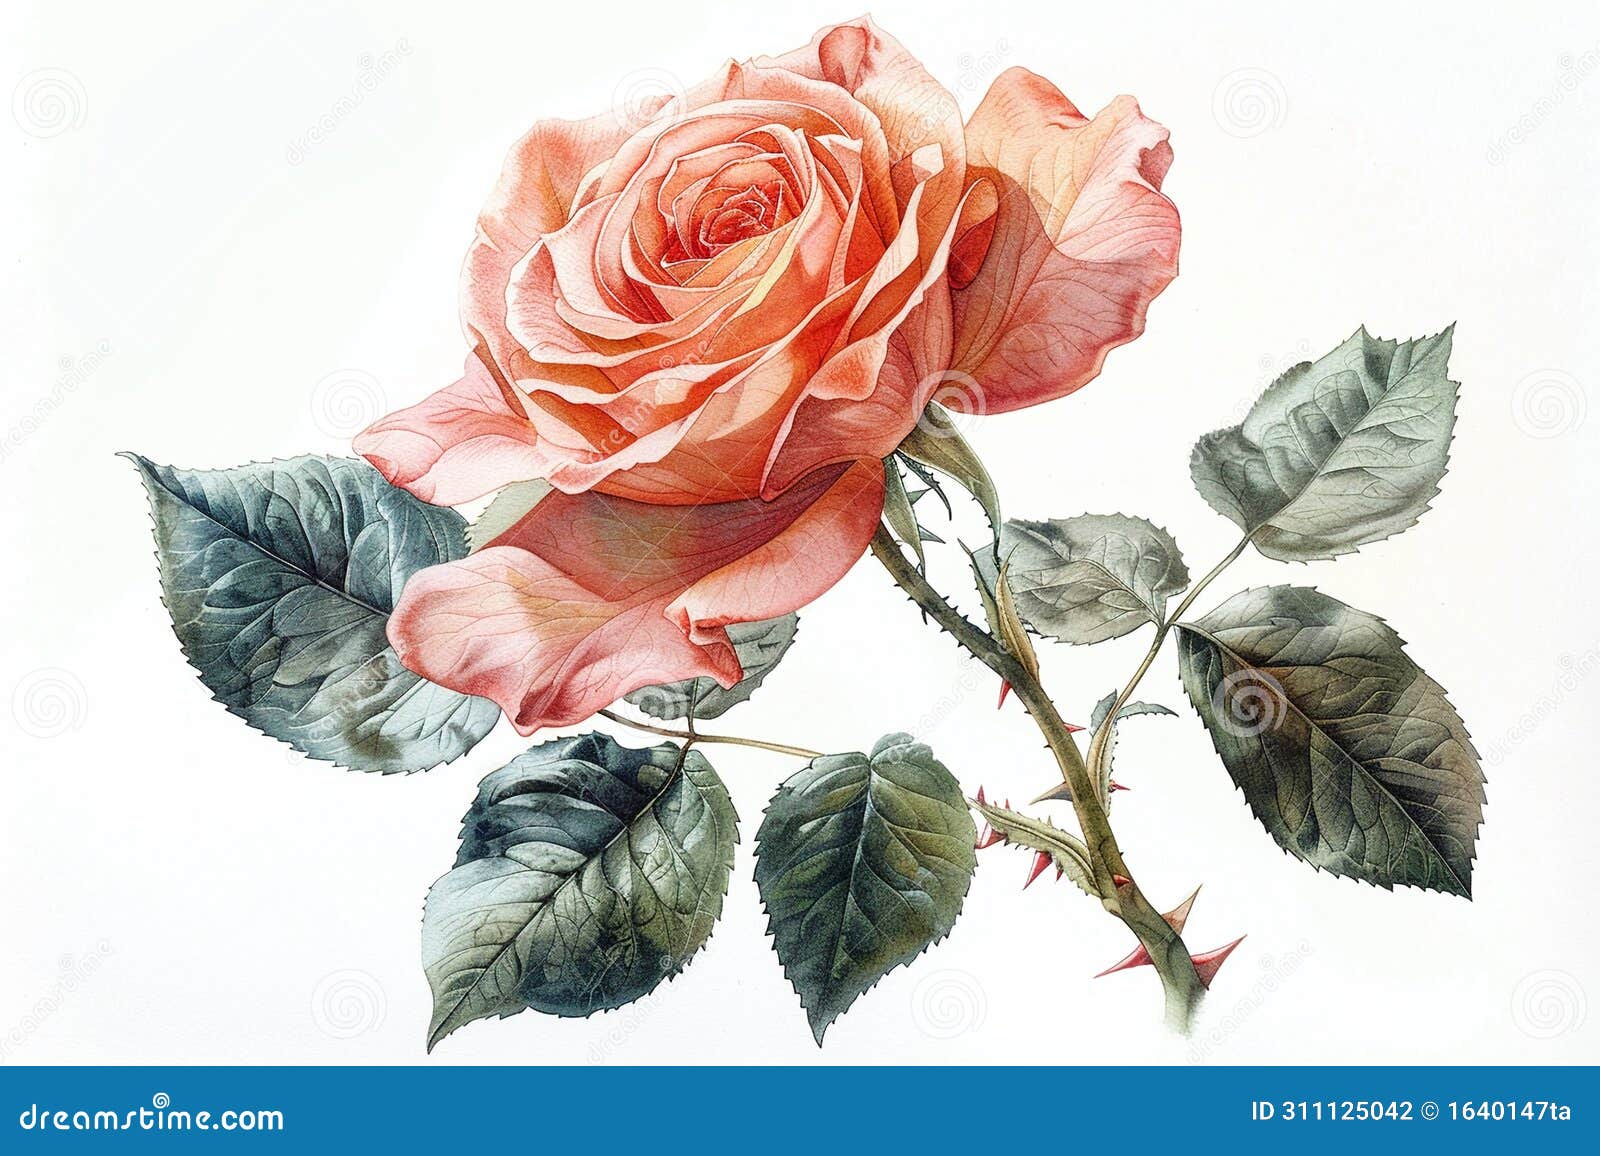 vintage rose botanica style